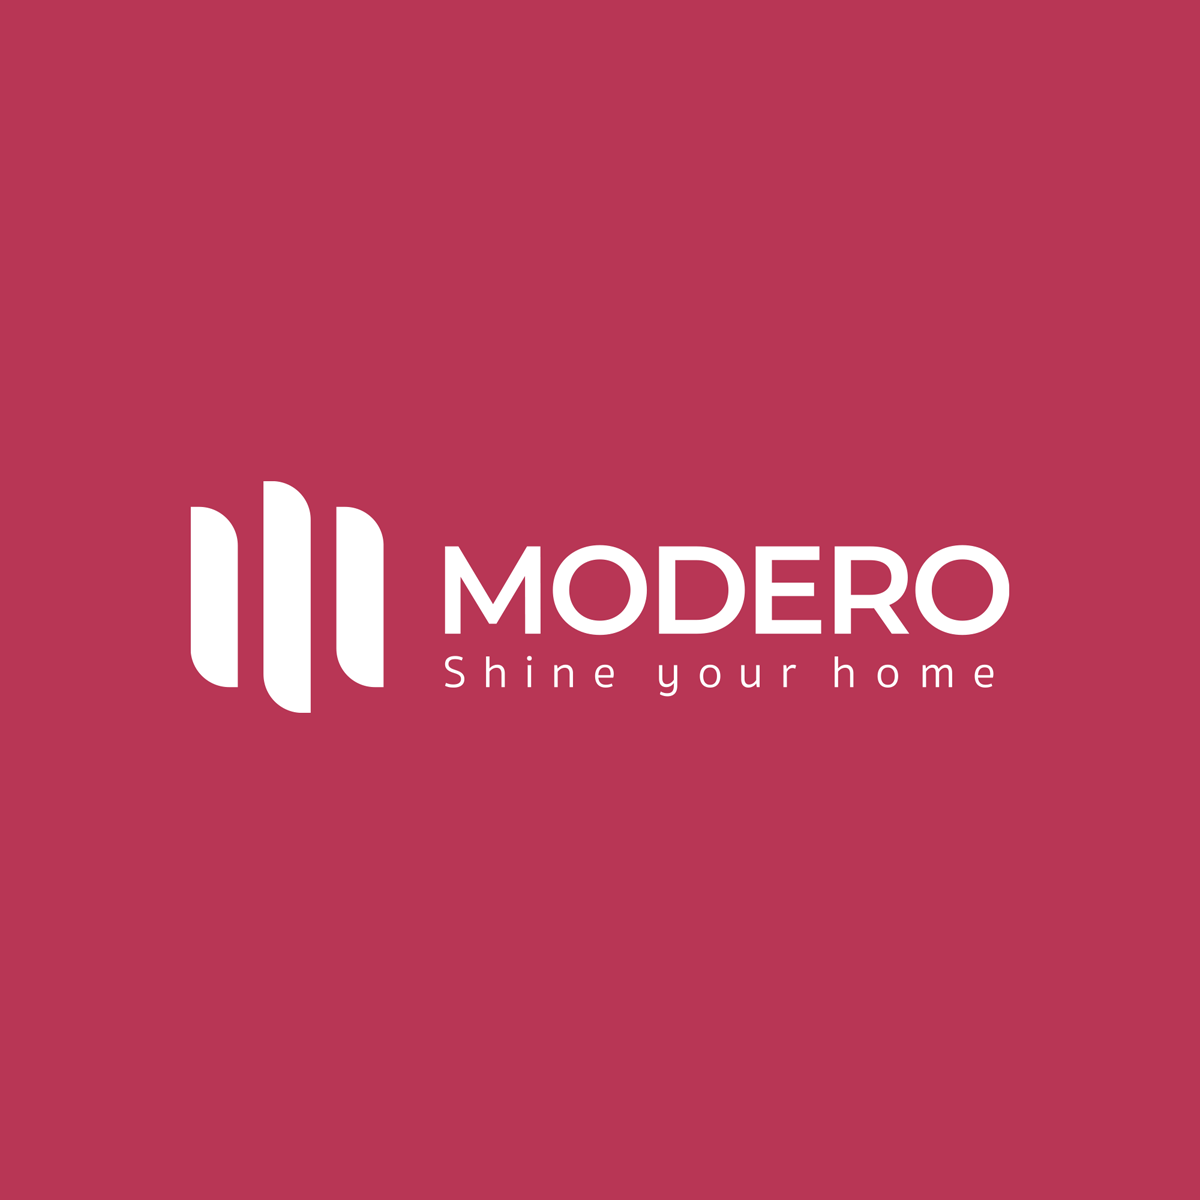 Logo của Modero mới